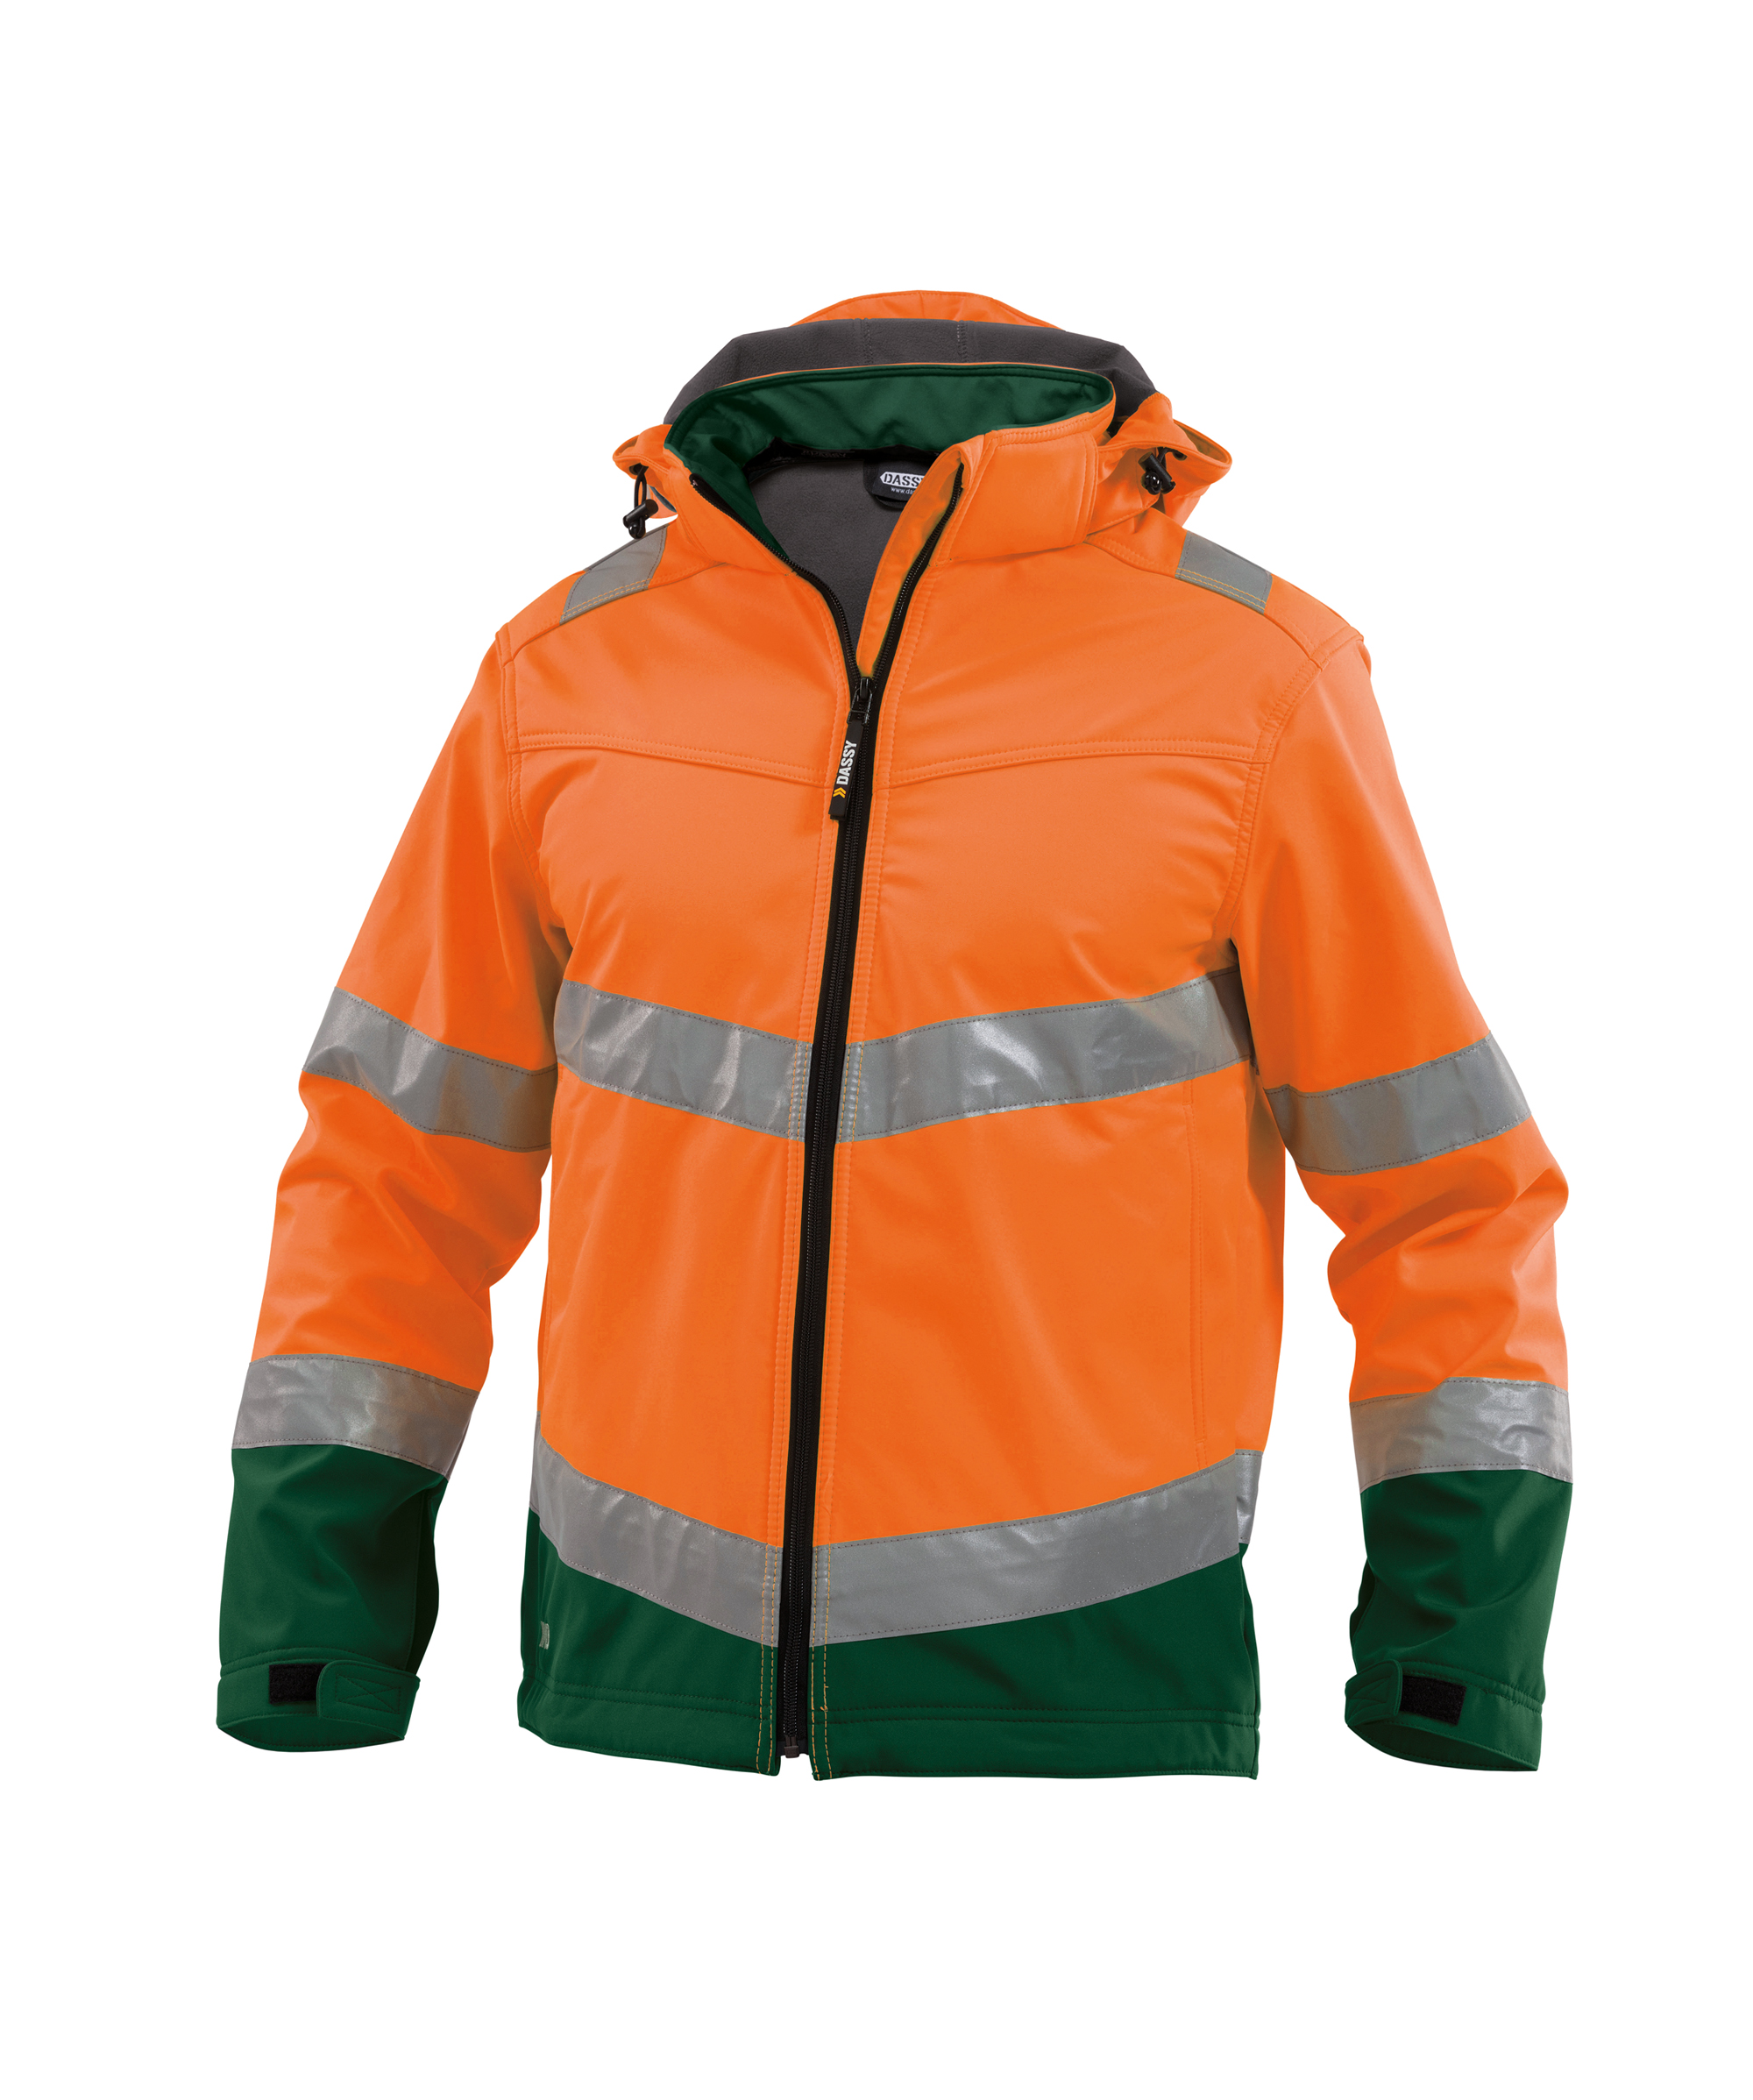 malaga_high-visibility-softshell-work-jacket_fluo-orange-bottle-green_front.jpg